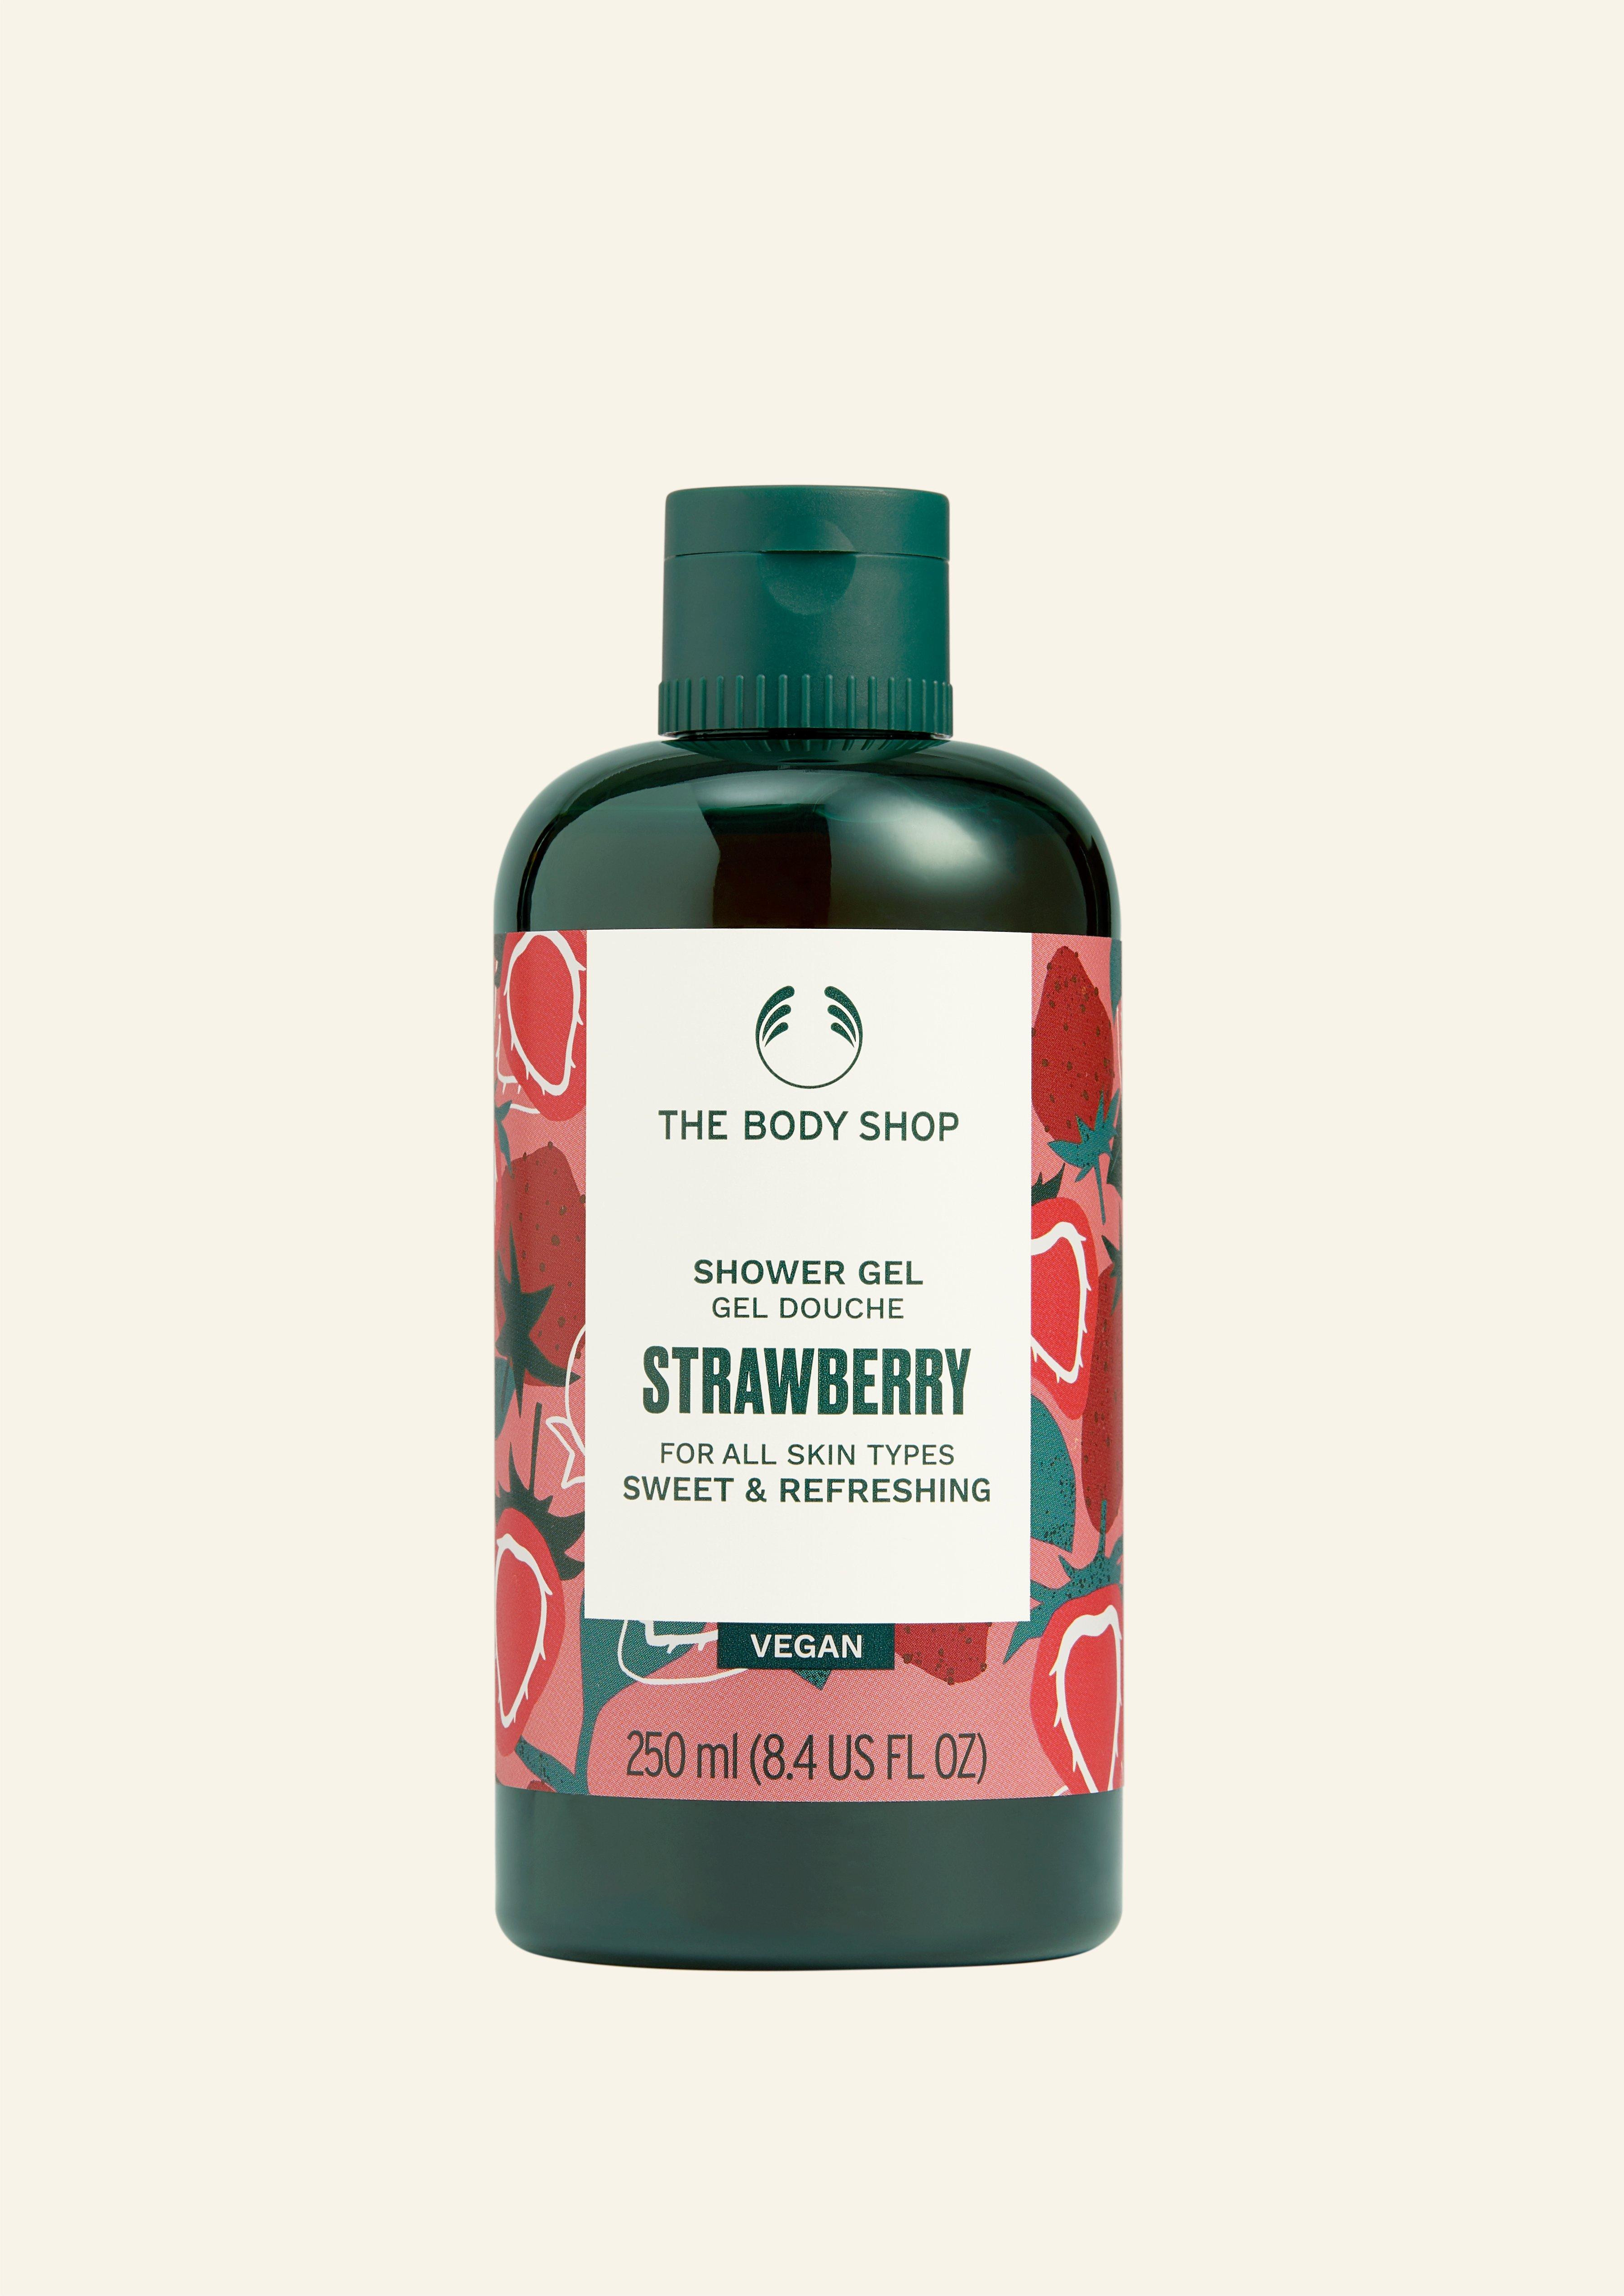 Shower Gel - The Body Shop Strawberry Vegan Shower Gel